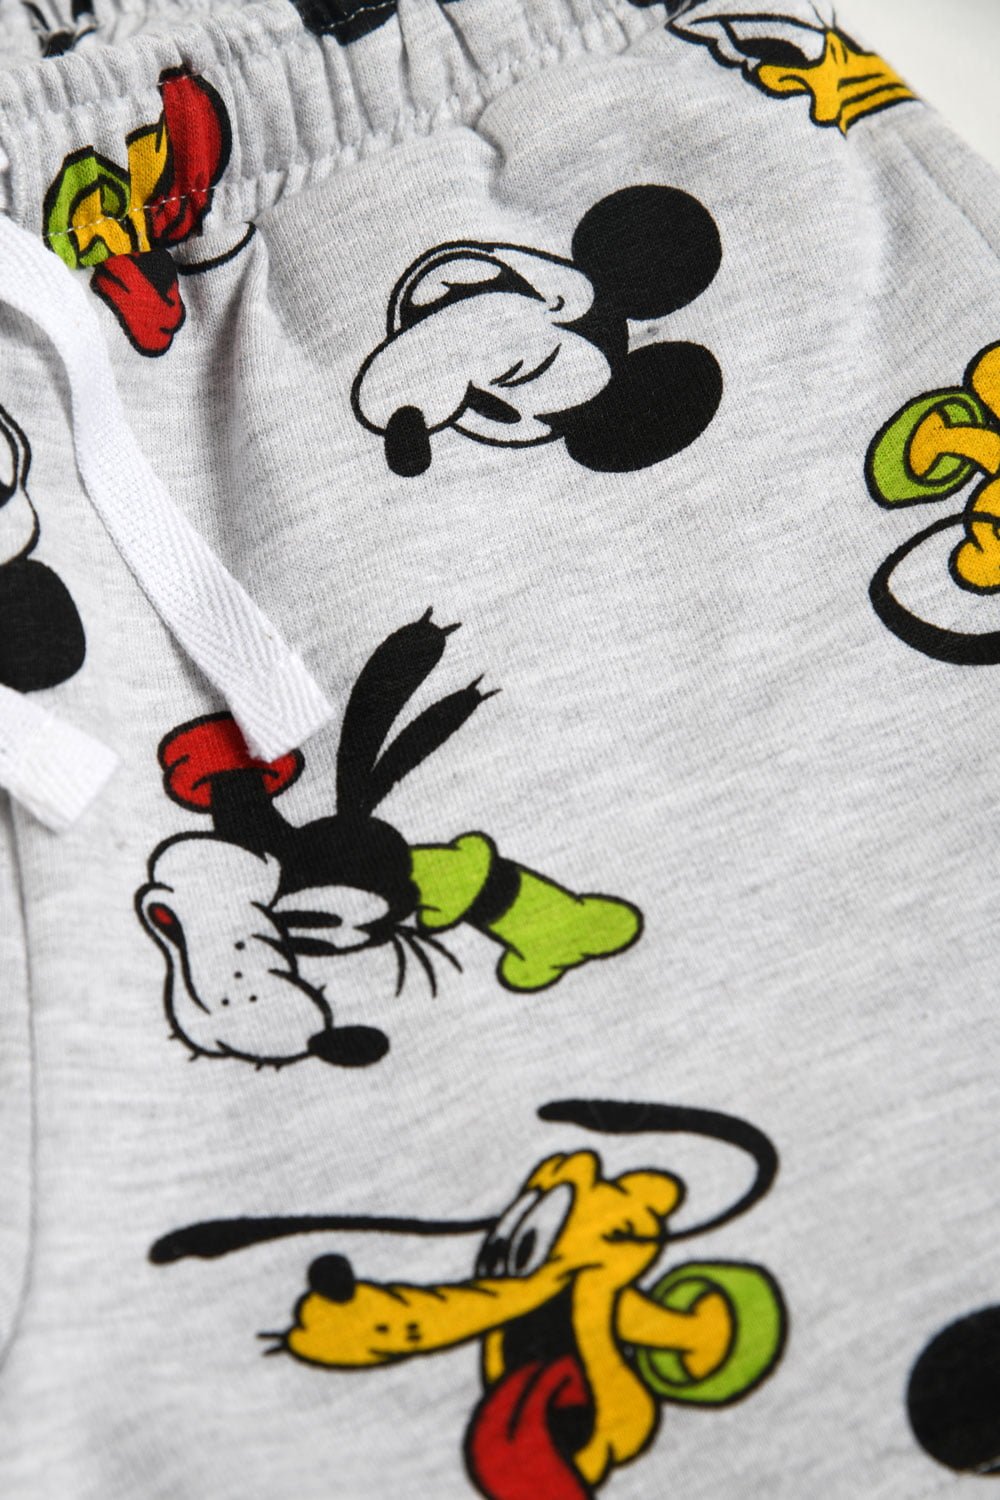 Disney Mickey Mouse Daywear Set - Brand Threads